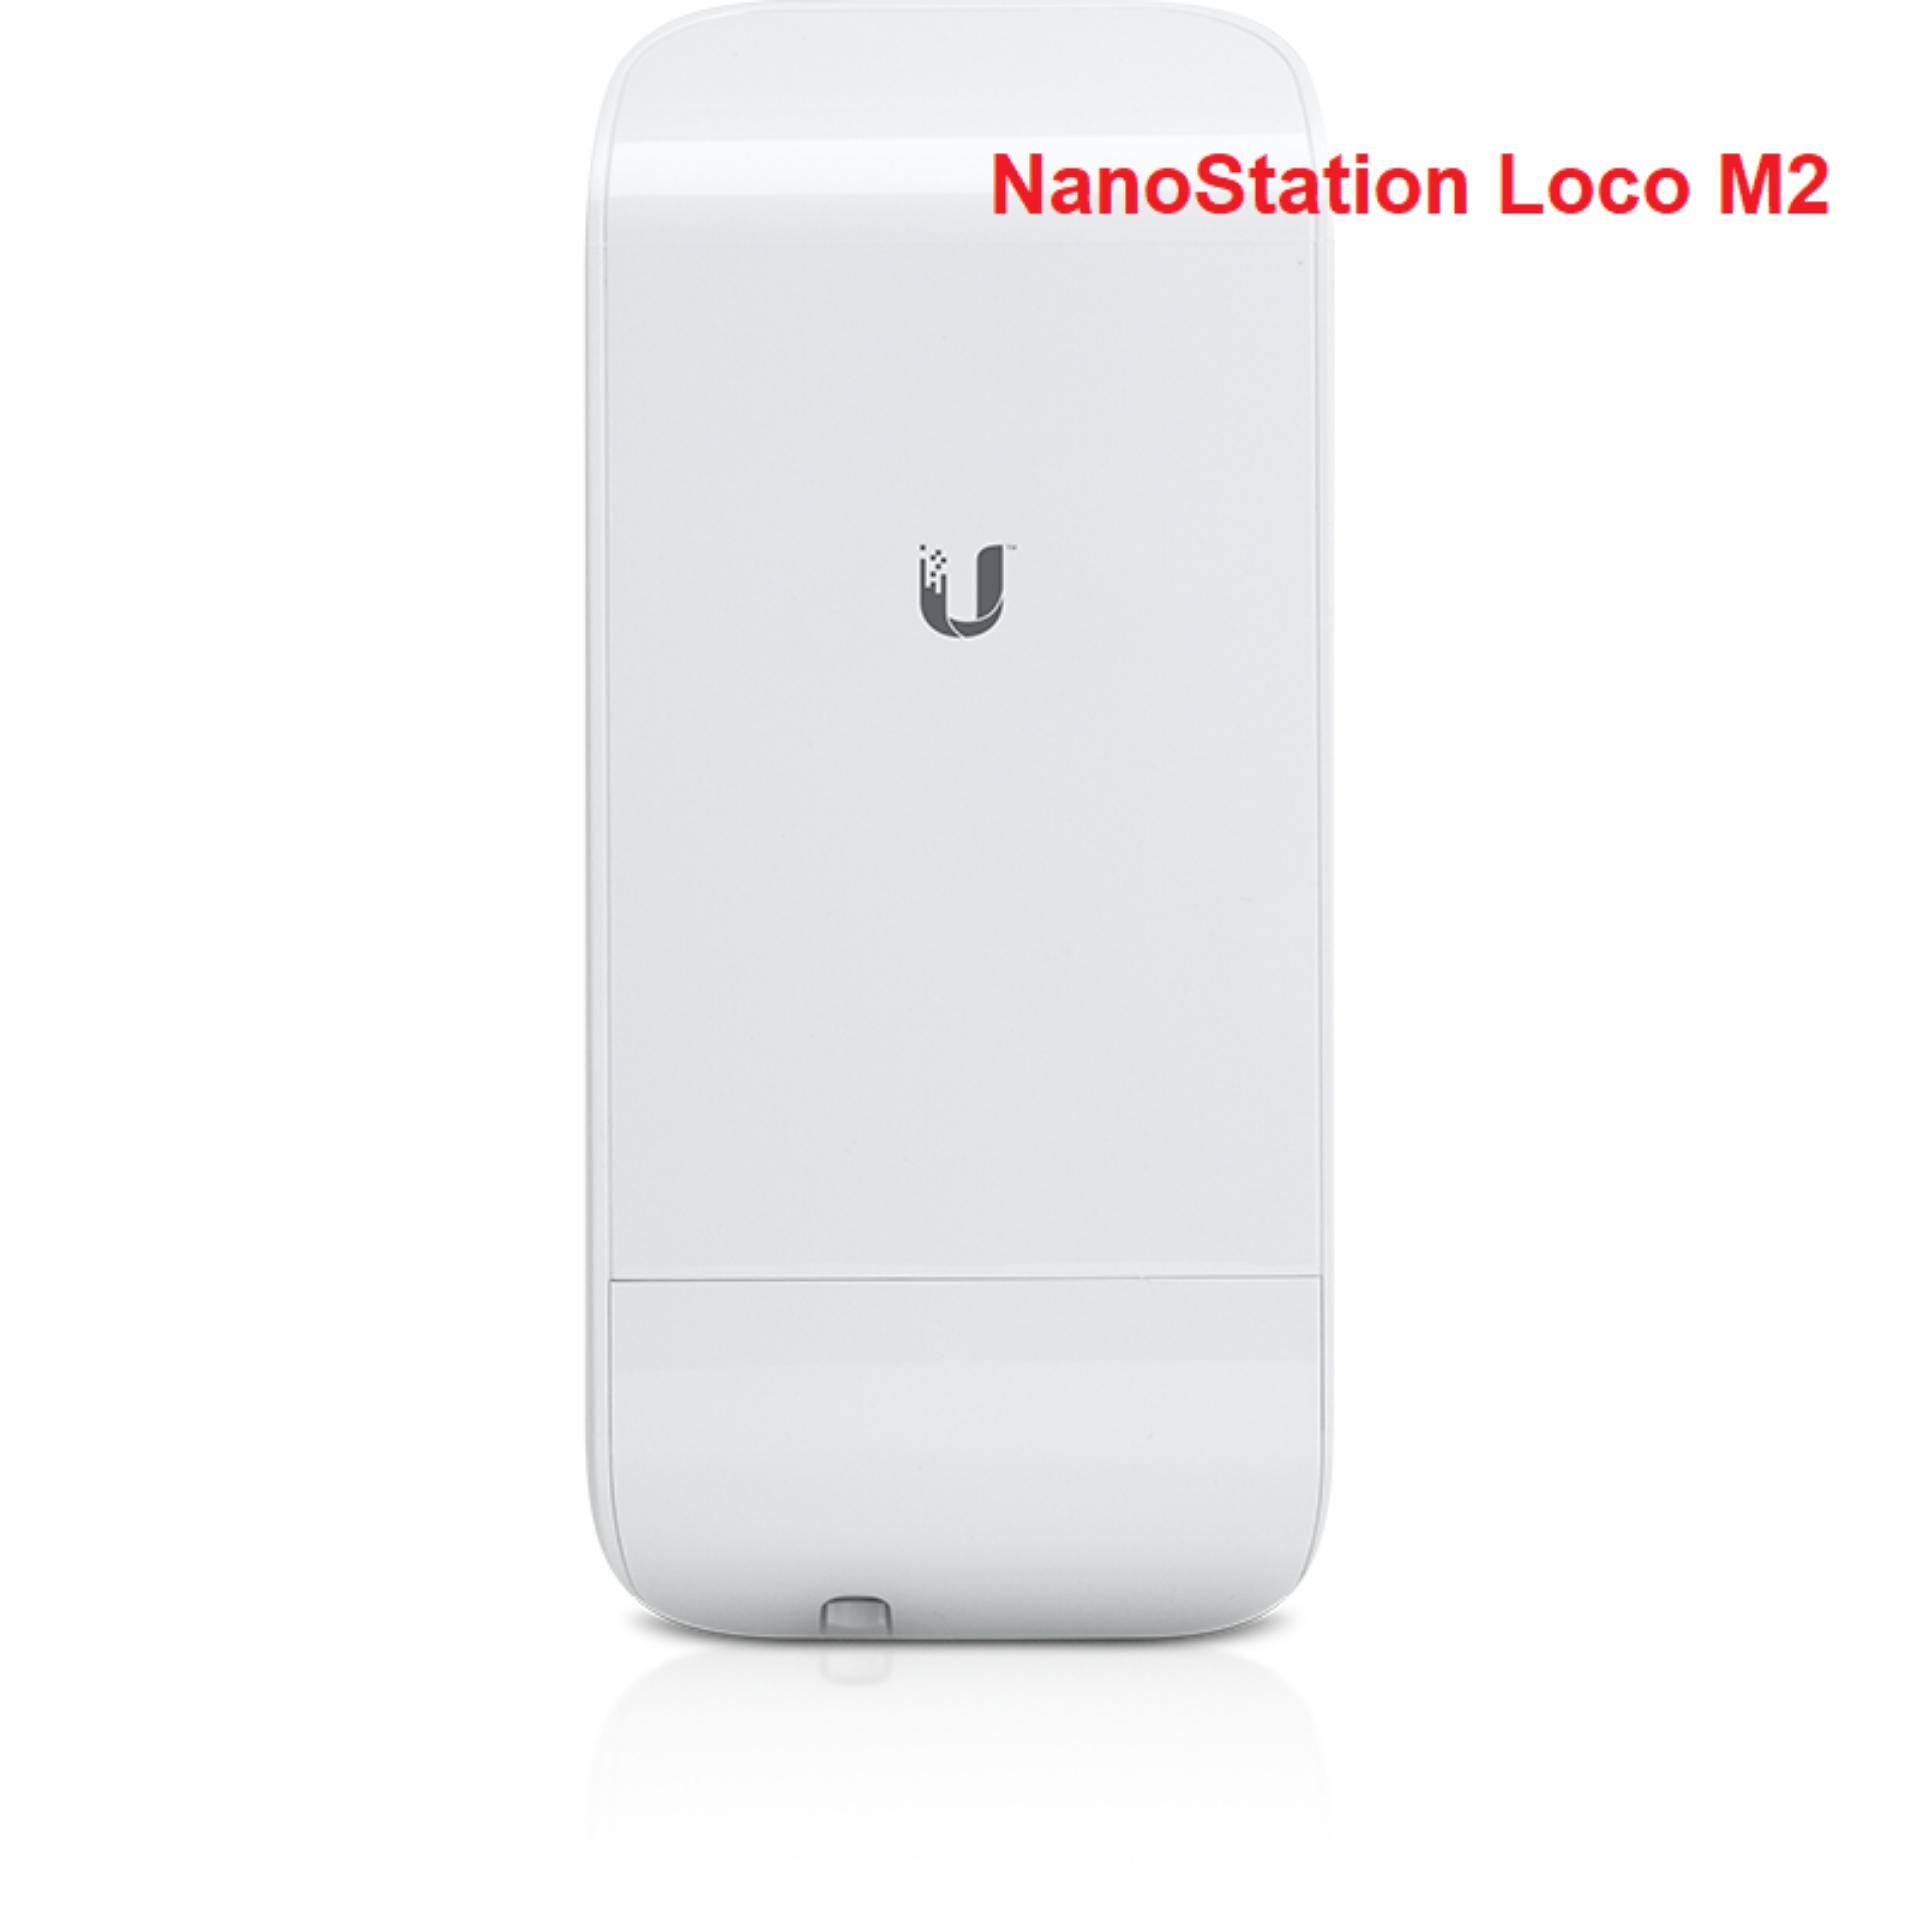 NanoStation Loco M2 Access Point Outdoor 2.4GHz 150Mbps พร้อม POE ในชุด (สินค้าไม่มีประกัน)